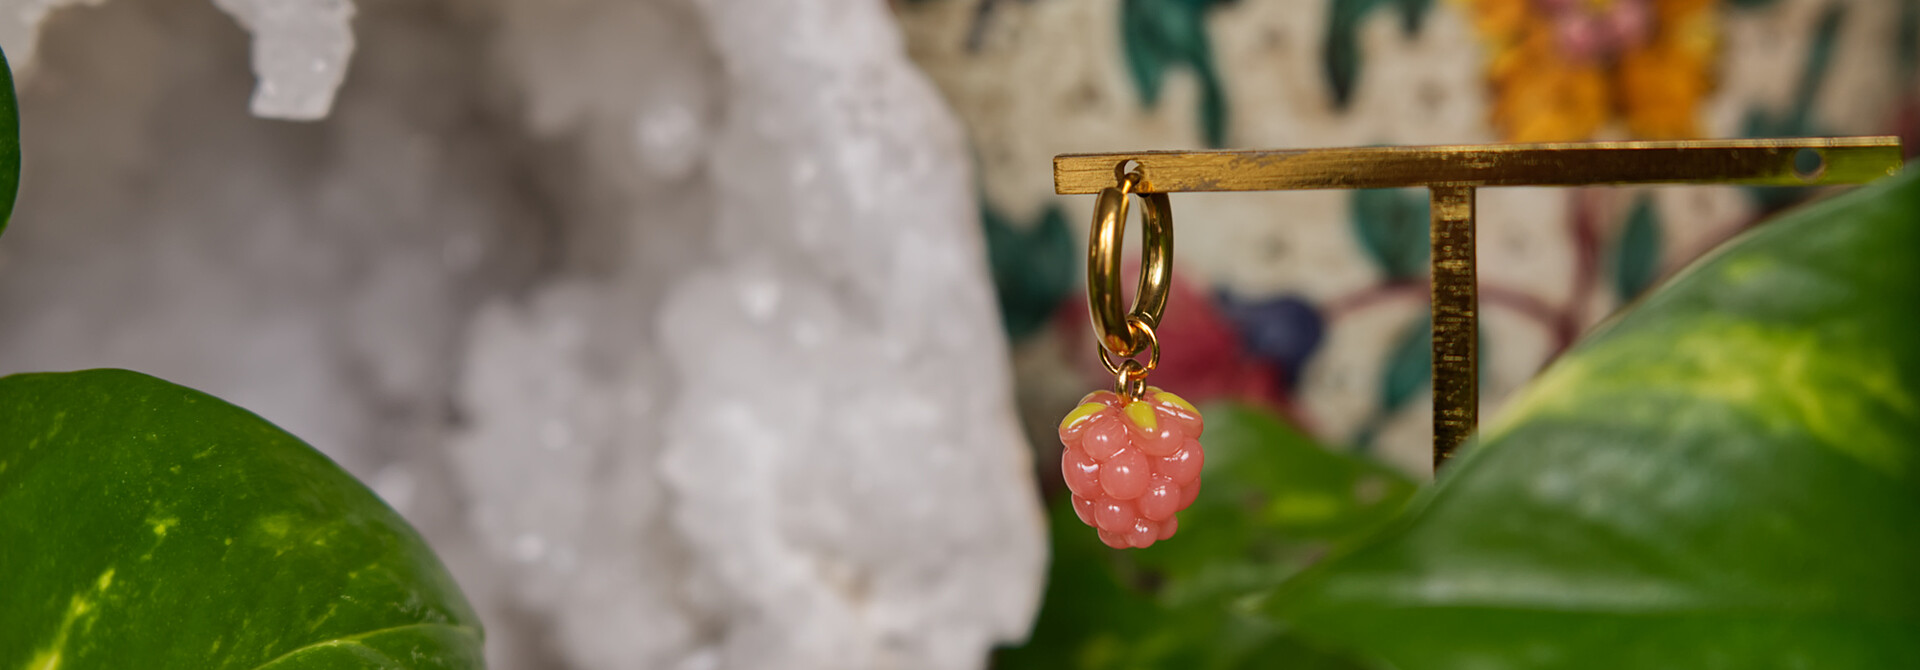 Grenache Grapes Earring (a piece)